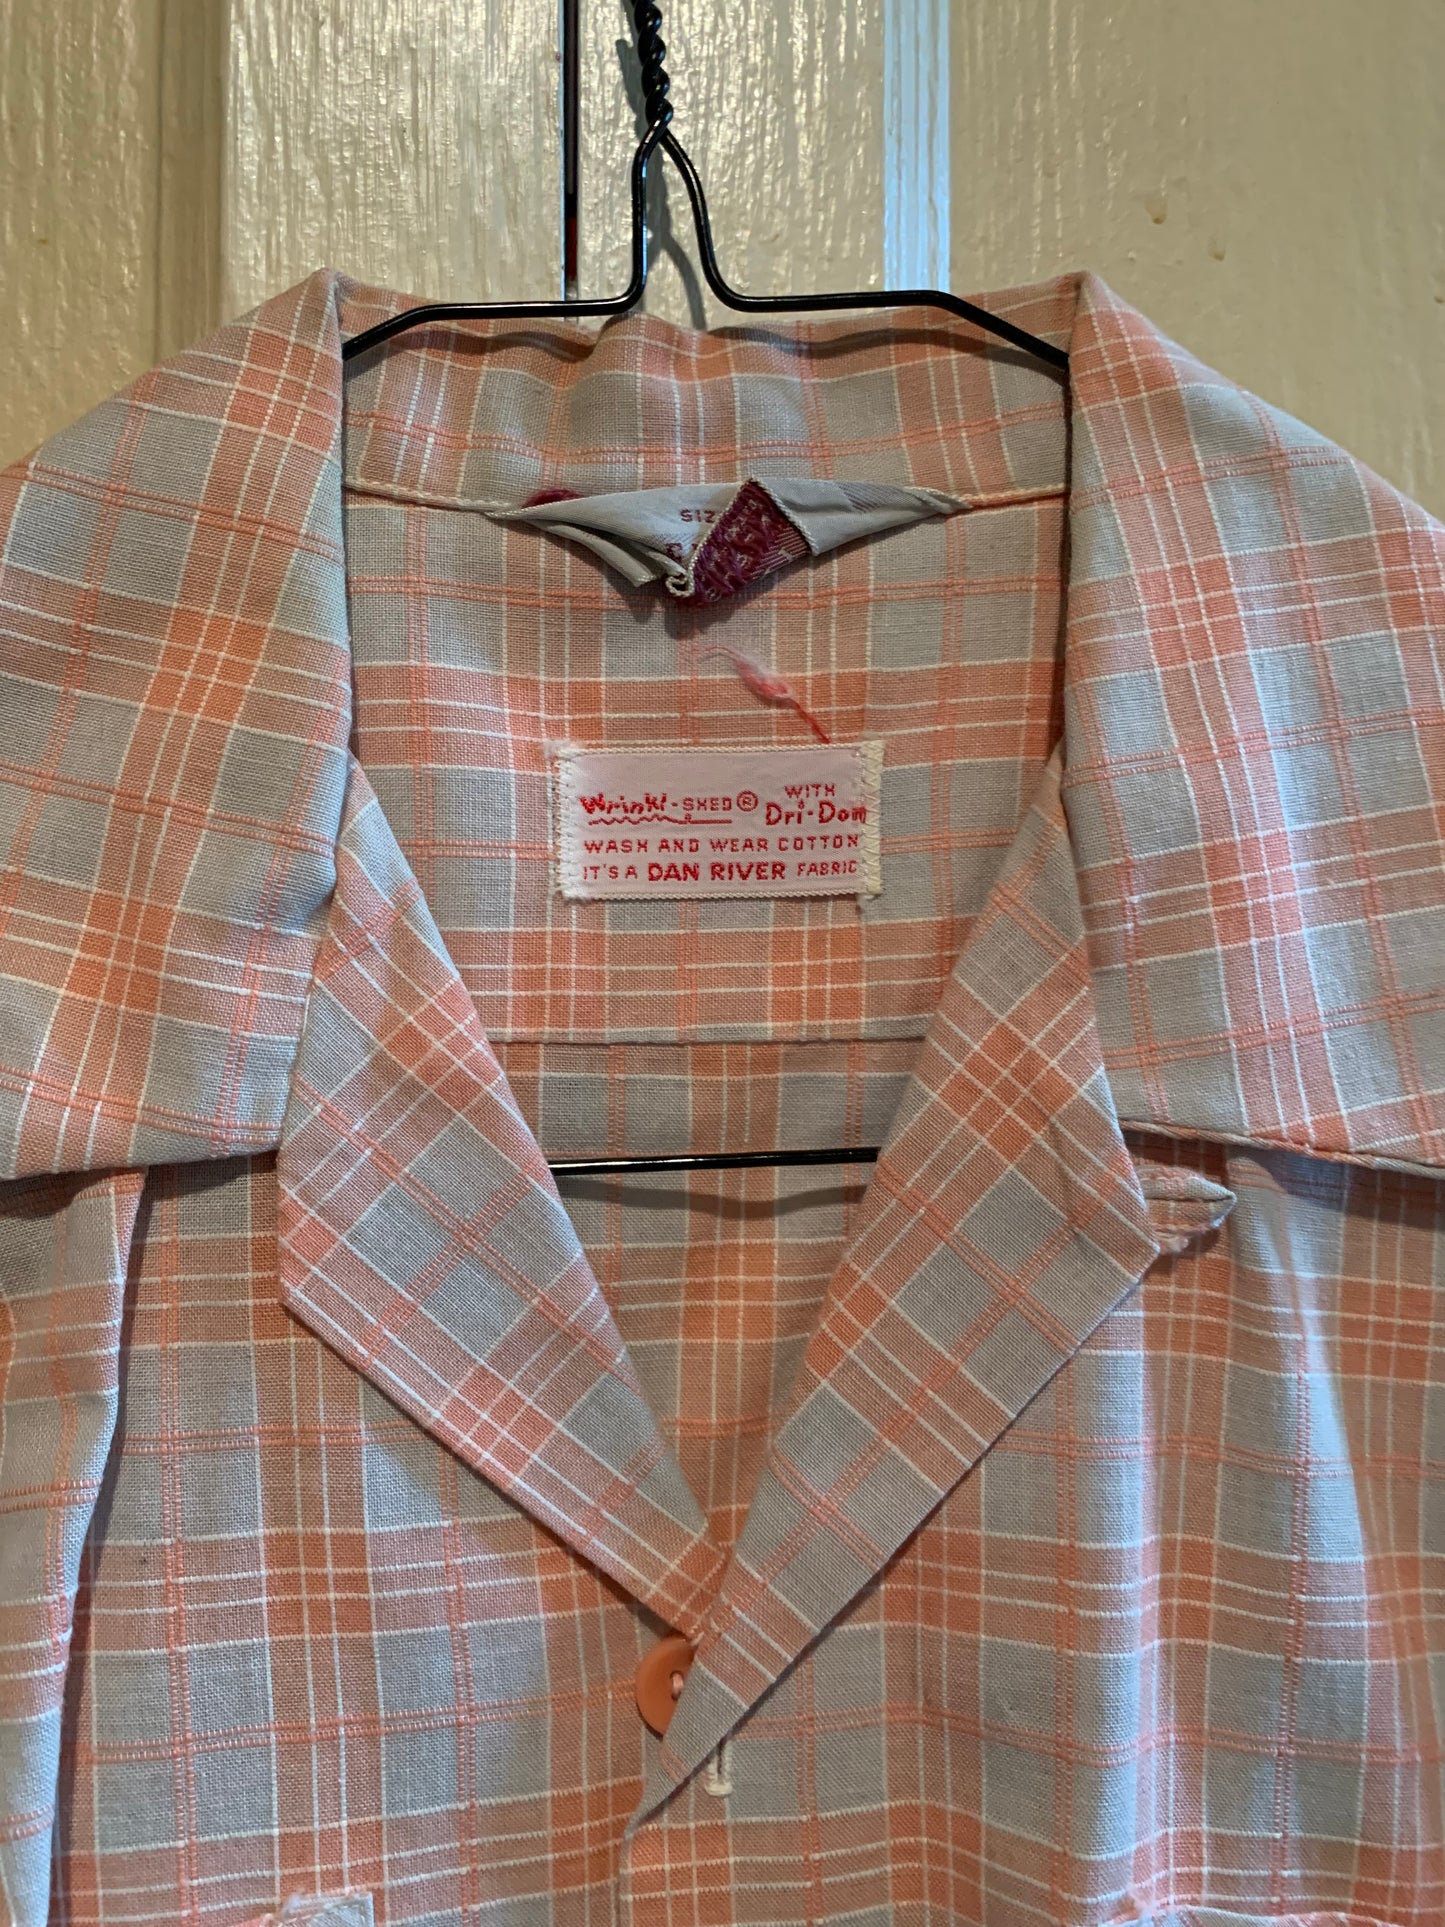 Tangerine and Tan Plaid Textured Cotton Rat Pack Shirt circa 1960s